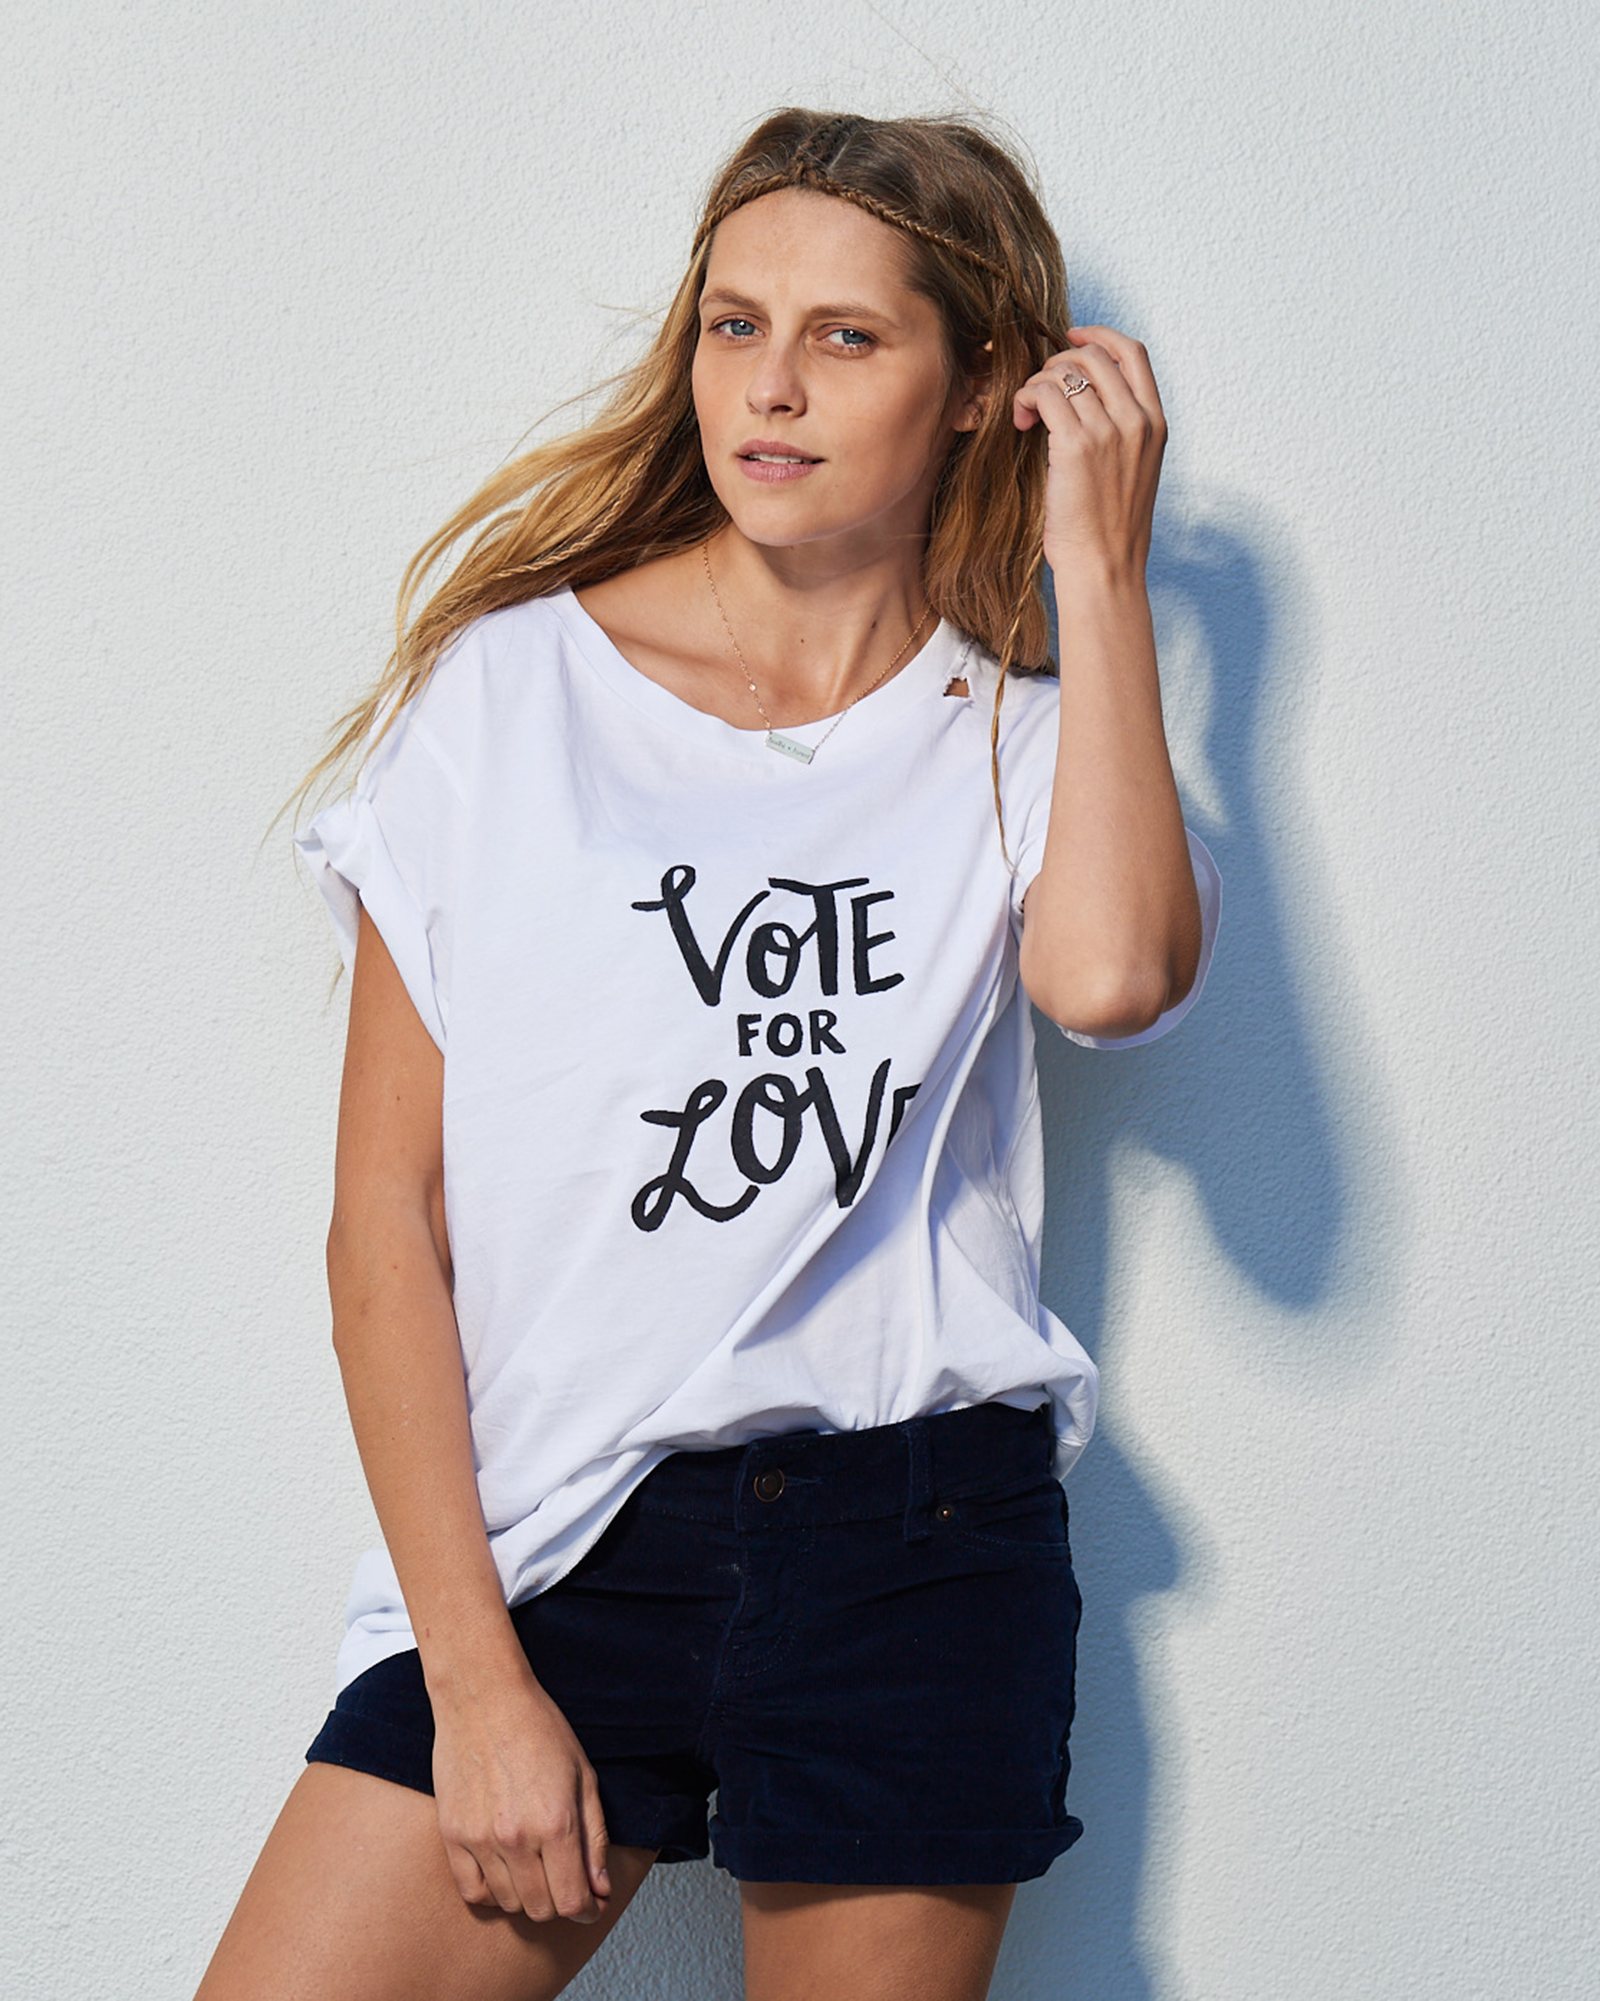 https://www.theplace.ru/archive/teresa_palmer/img/2017_elle_australia_vote_for_love_campaign.jpg